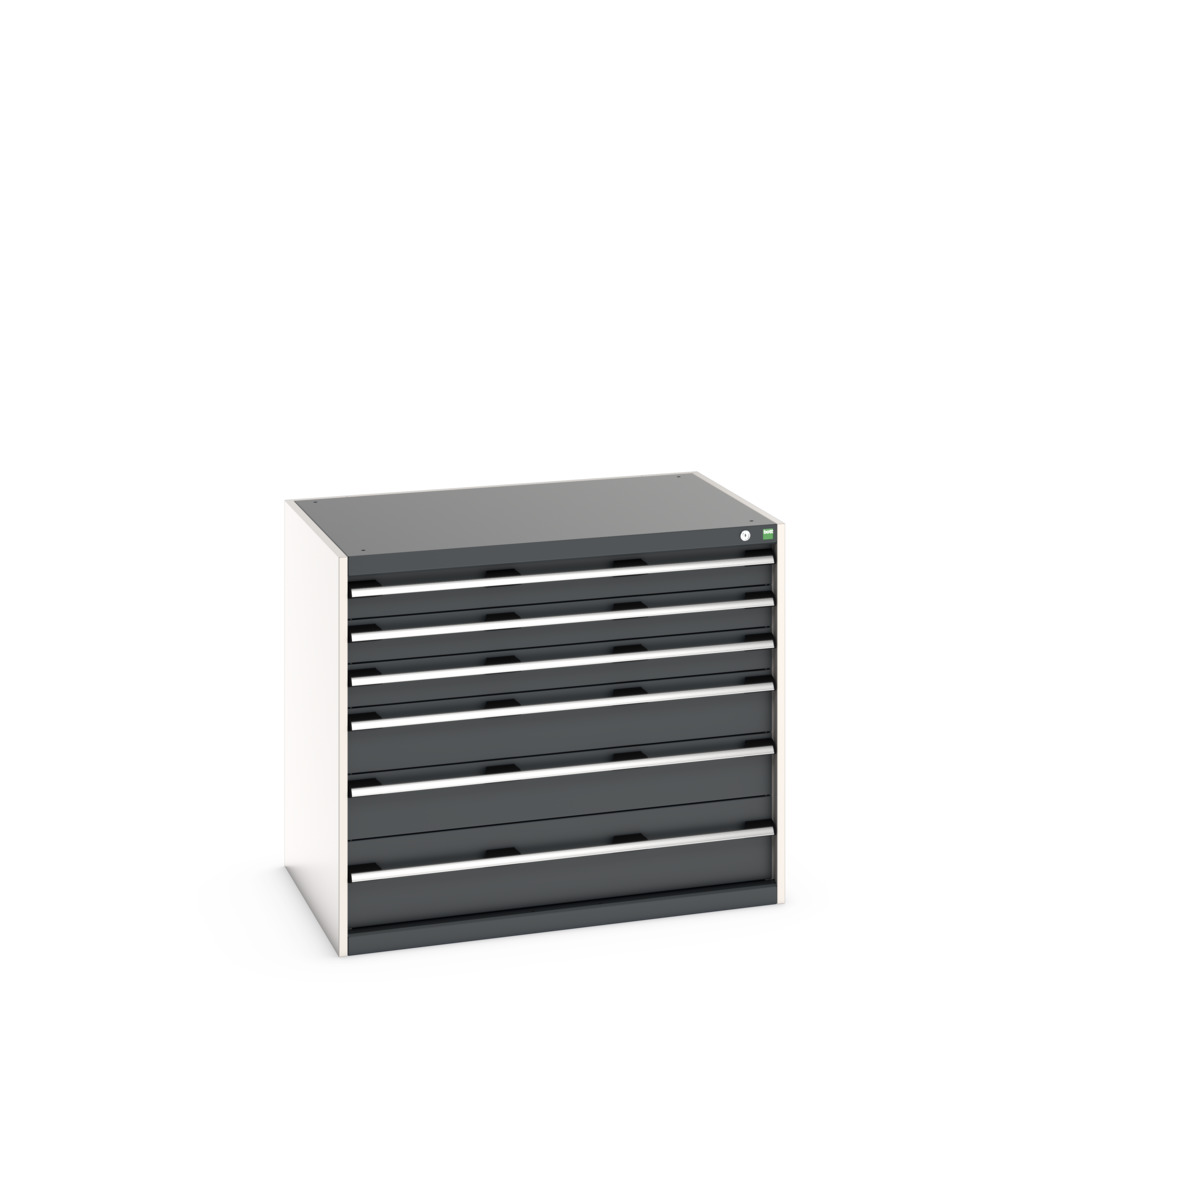 40029104. - cubio drawer cabinet